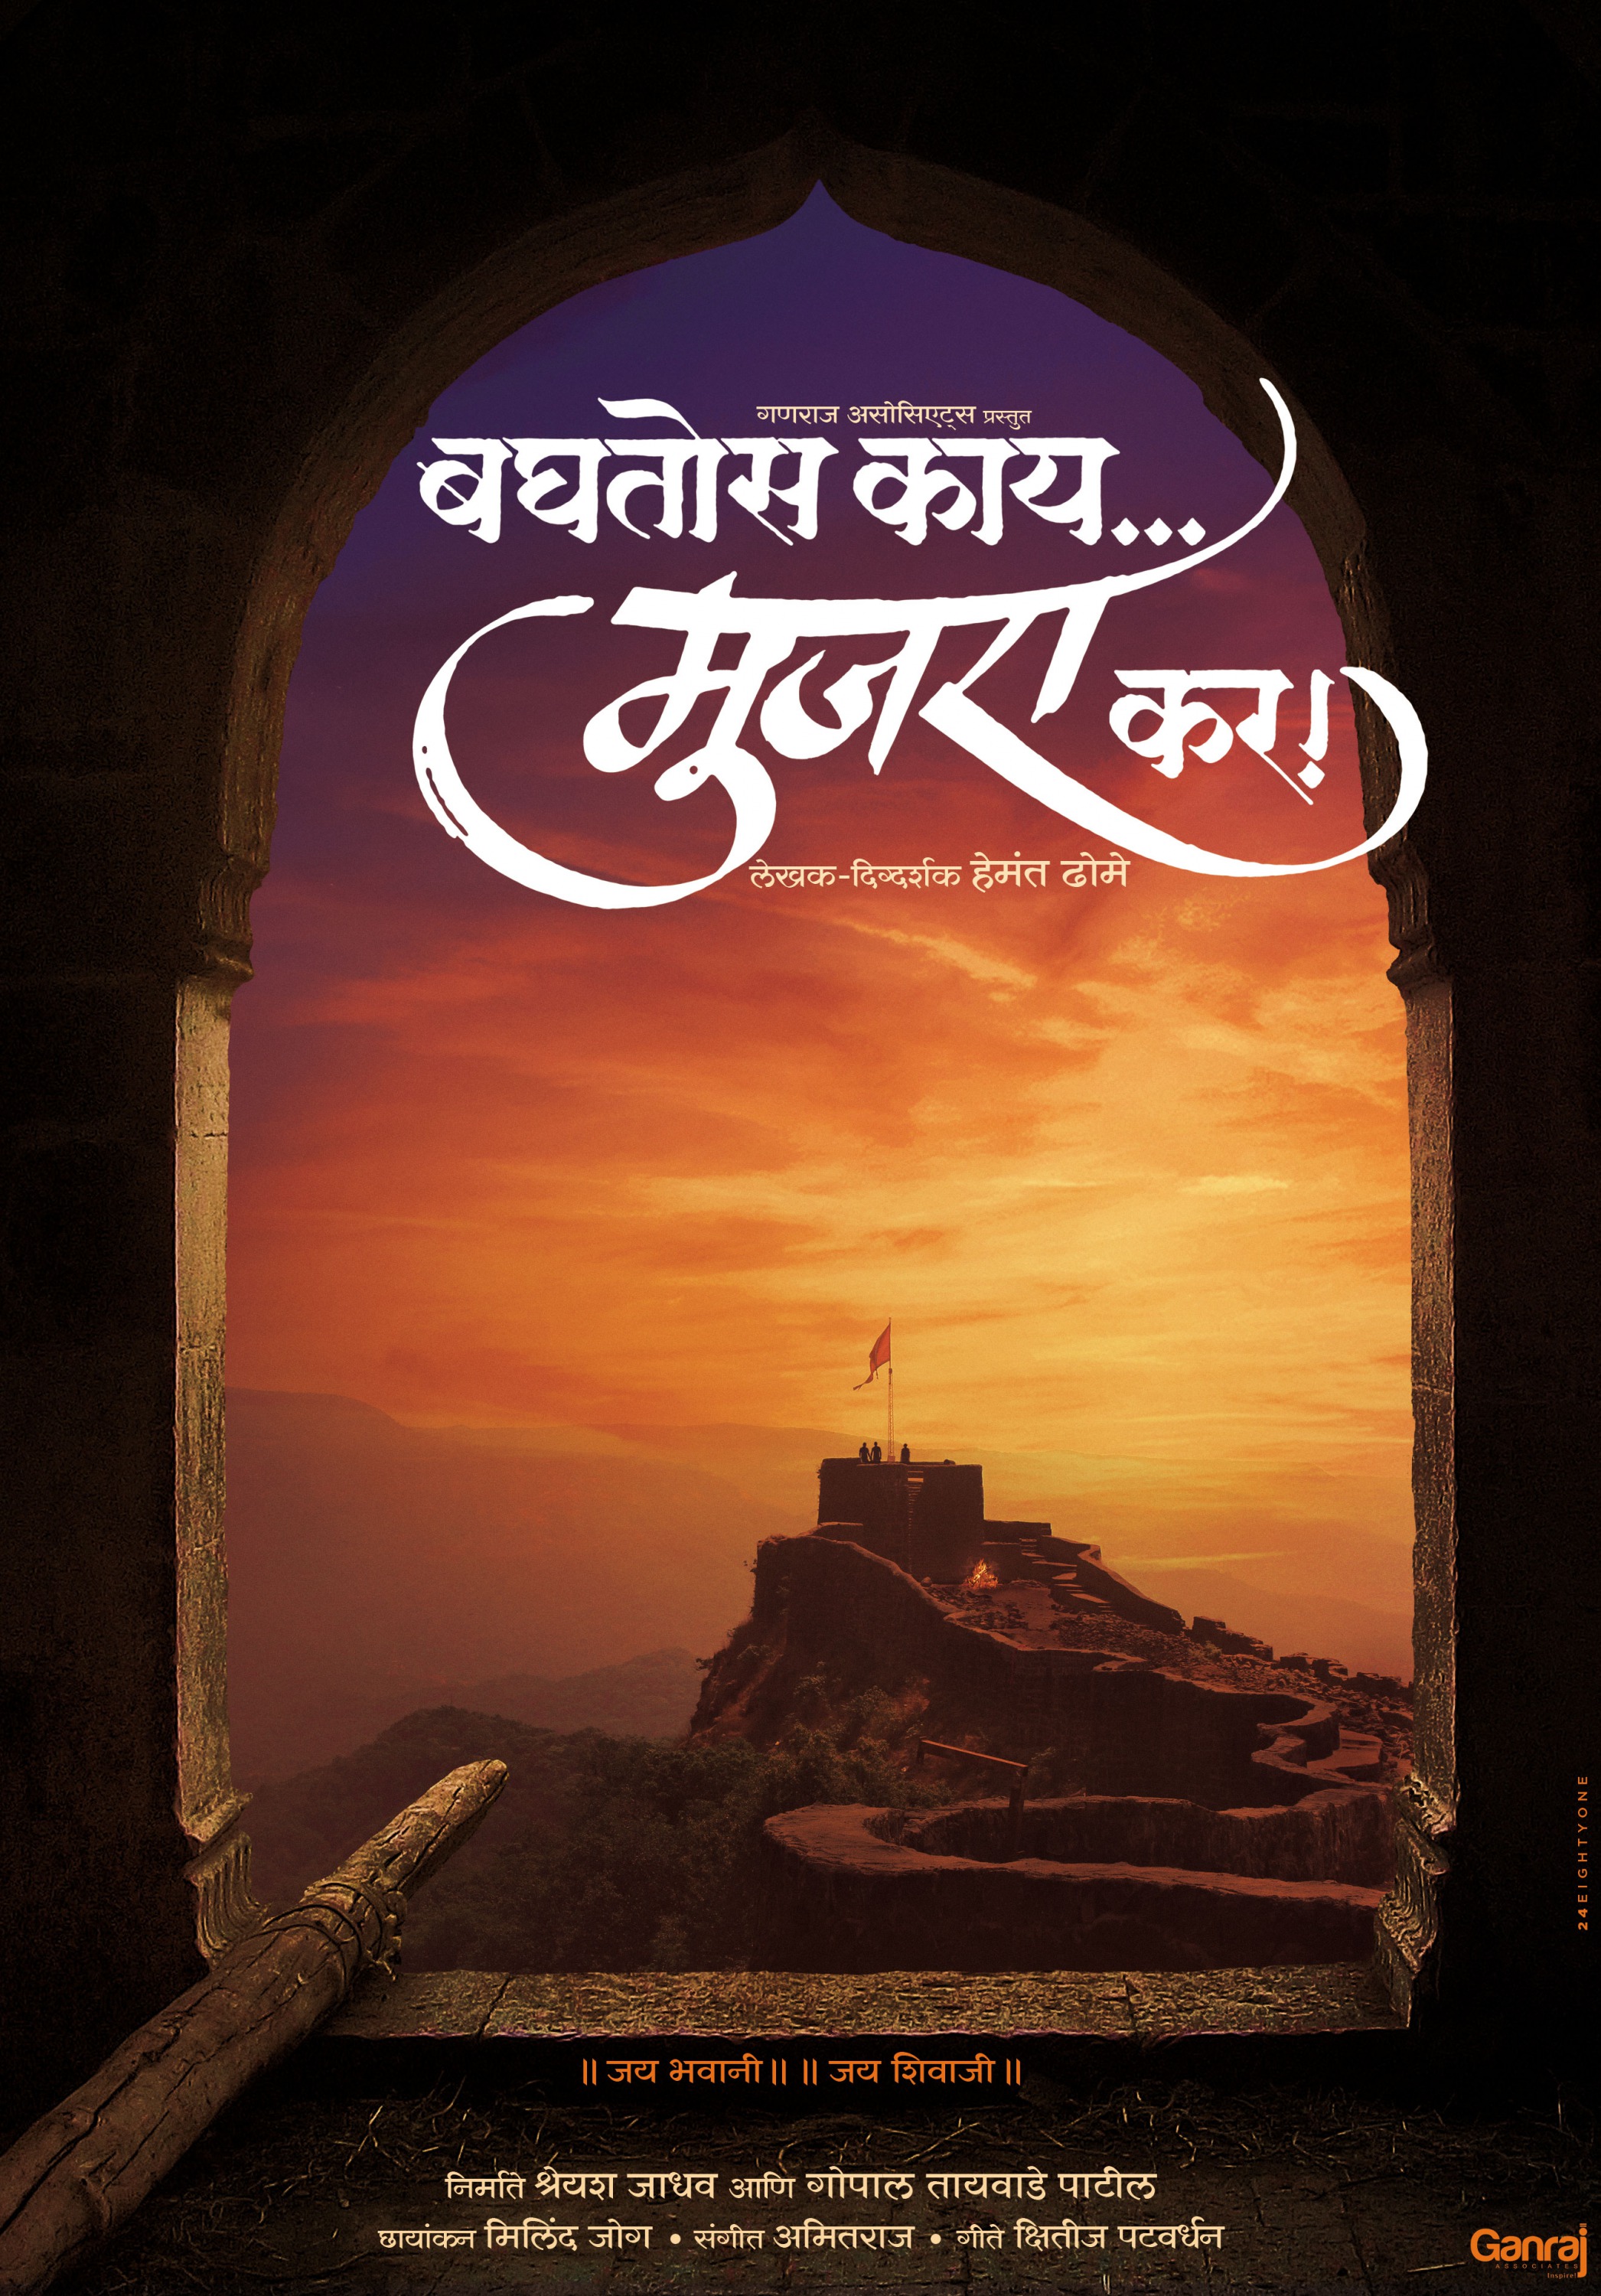 Mega Sized Movie Poster Image for Baghtos Kay Mujra Kar 